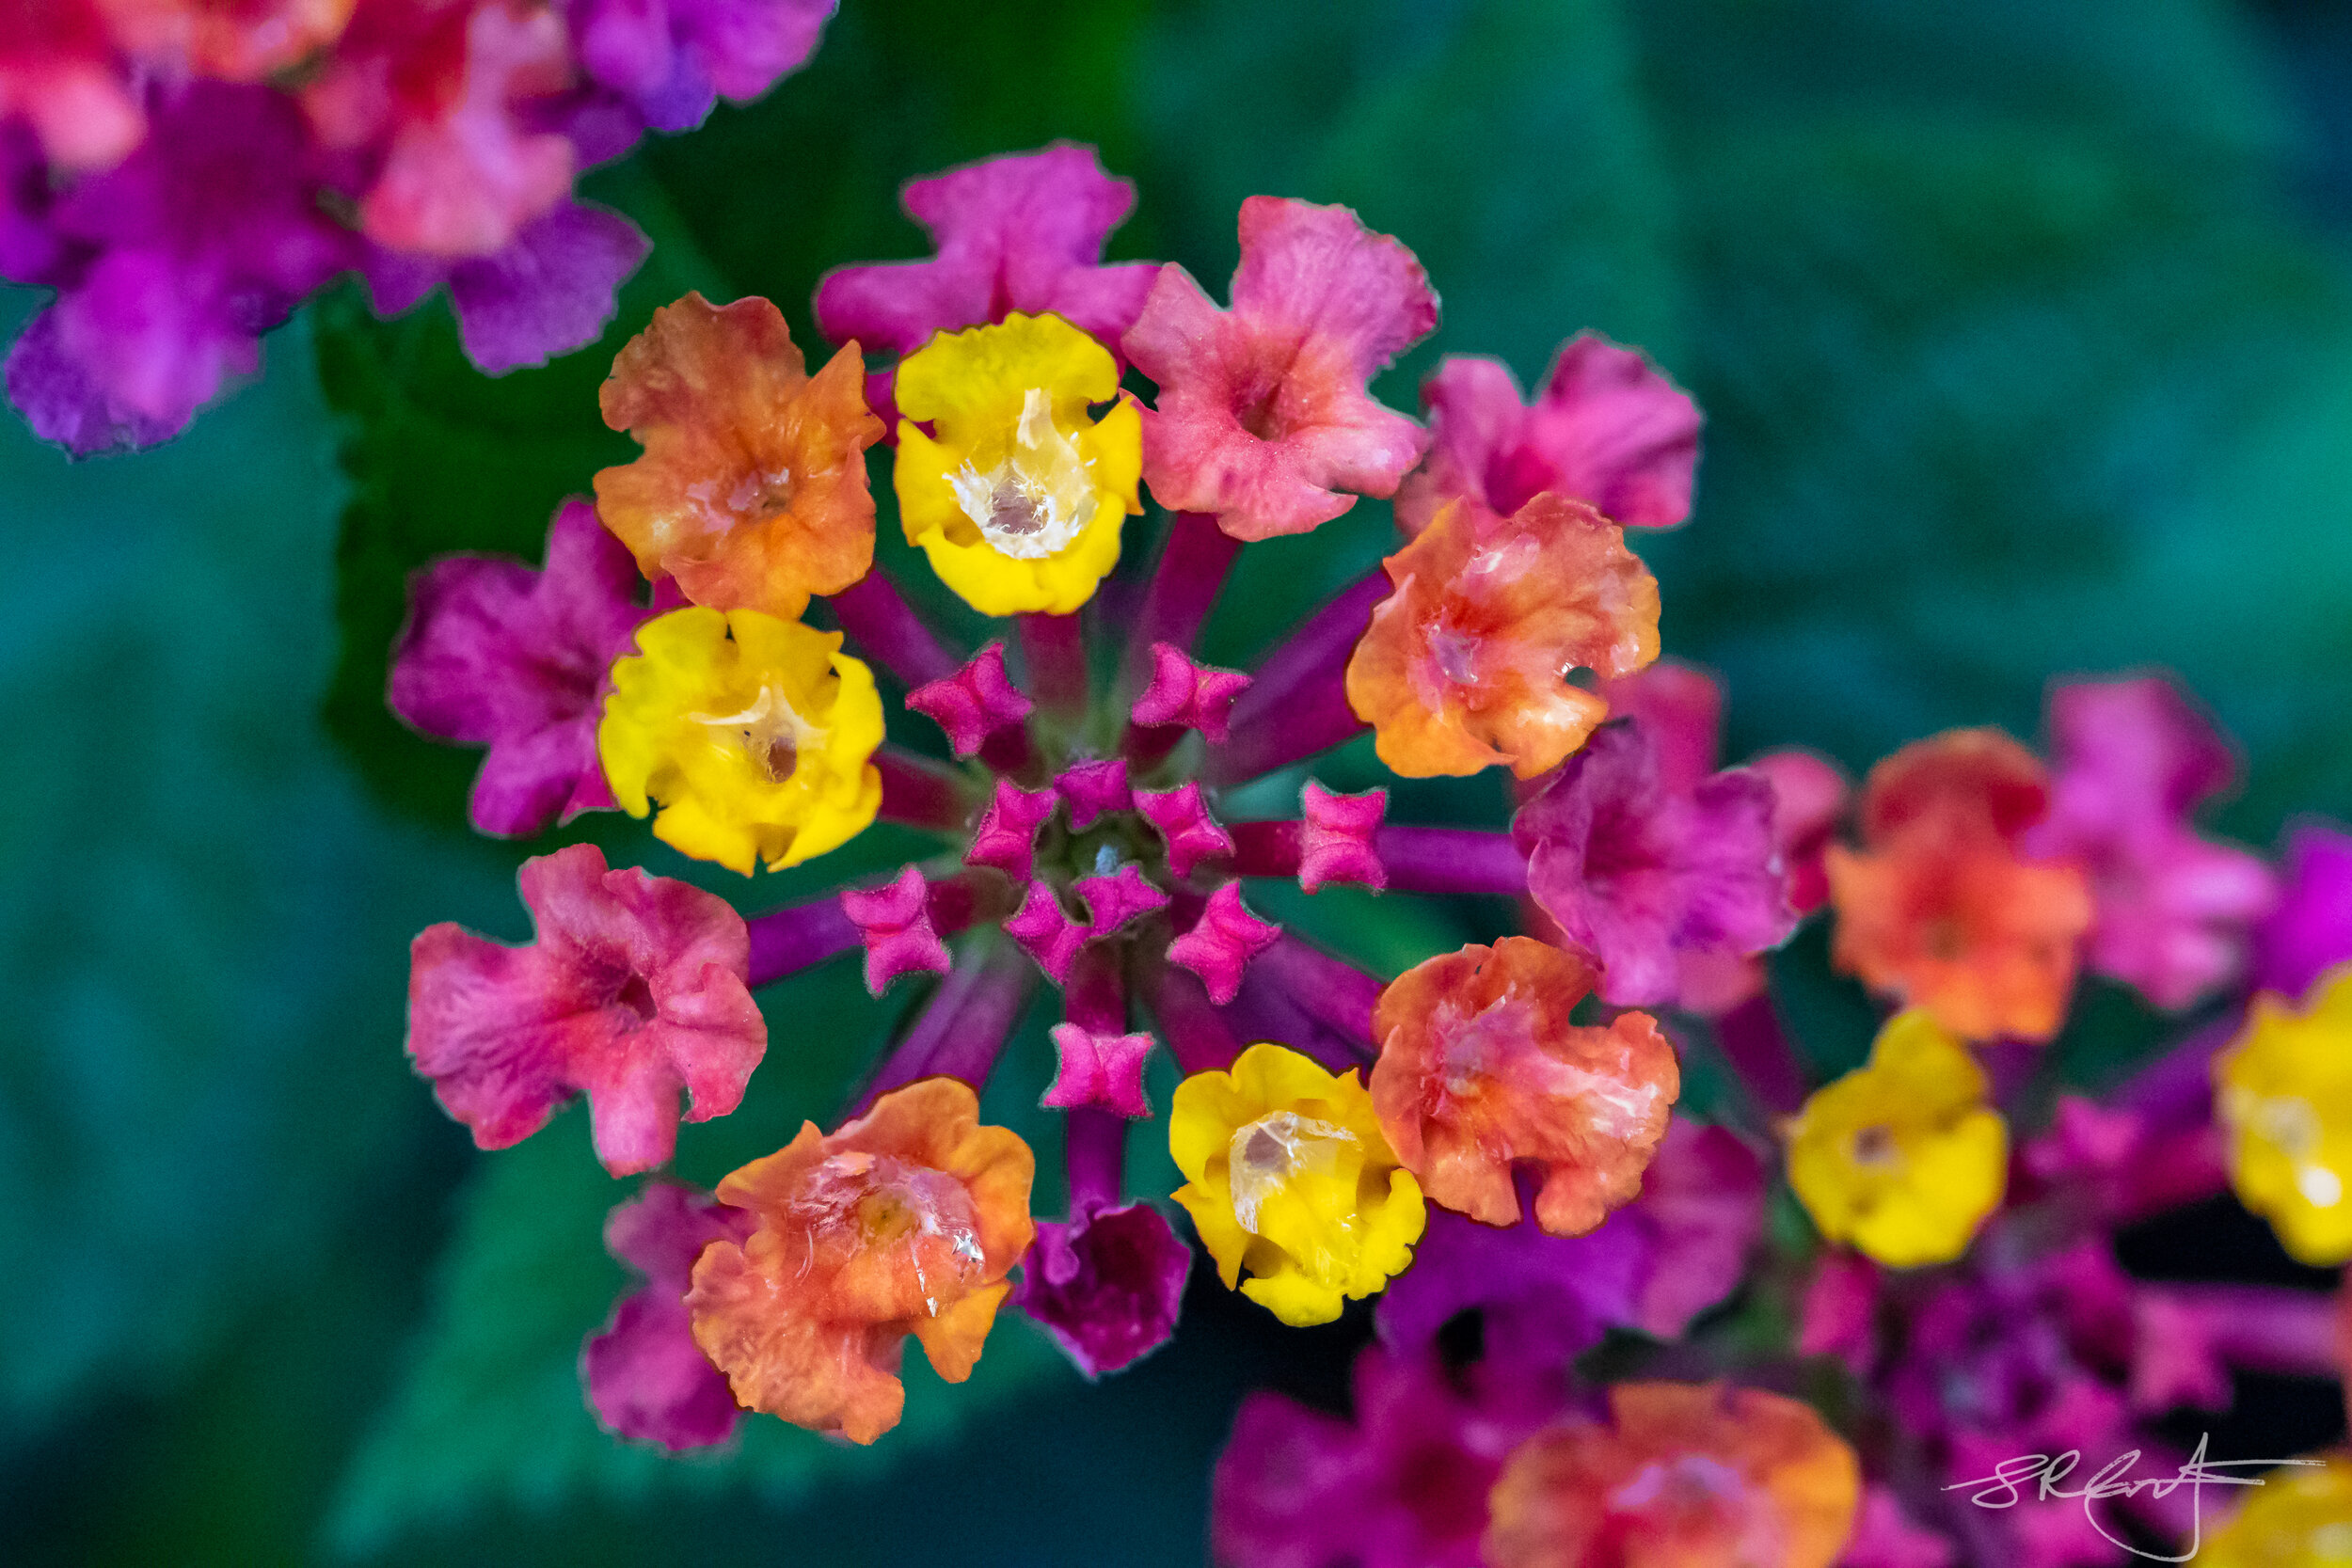 The Colorful Lantana Blossom